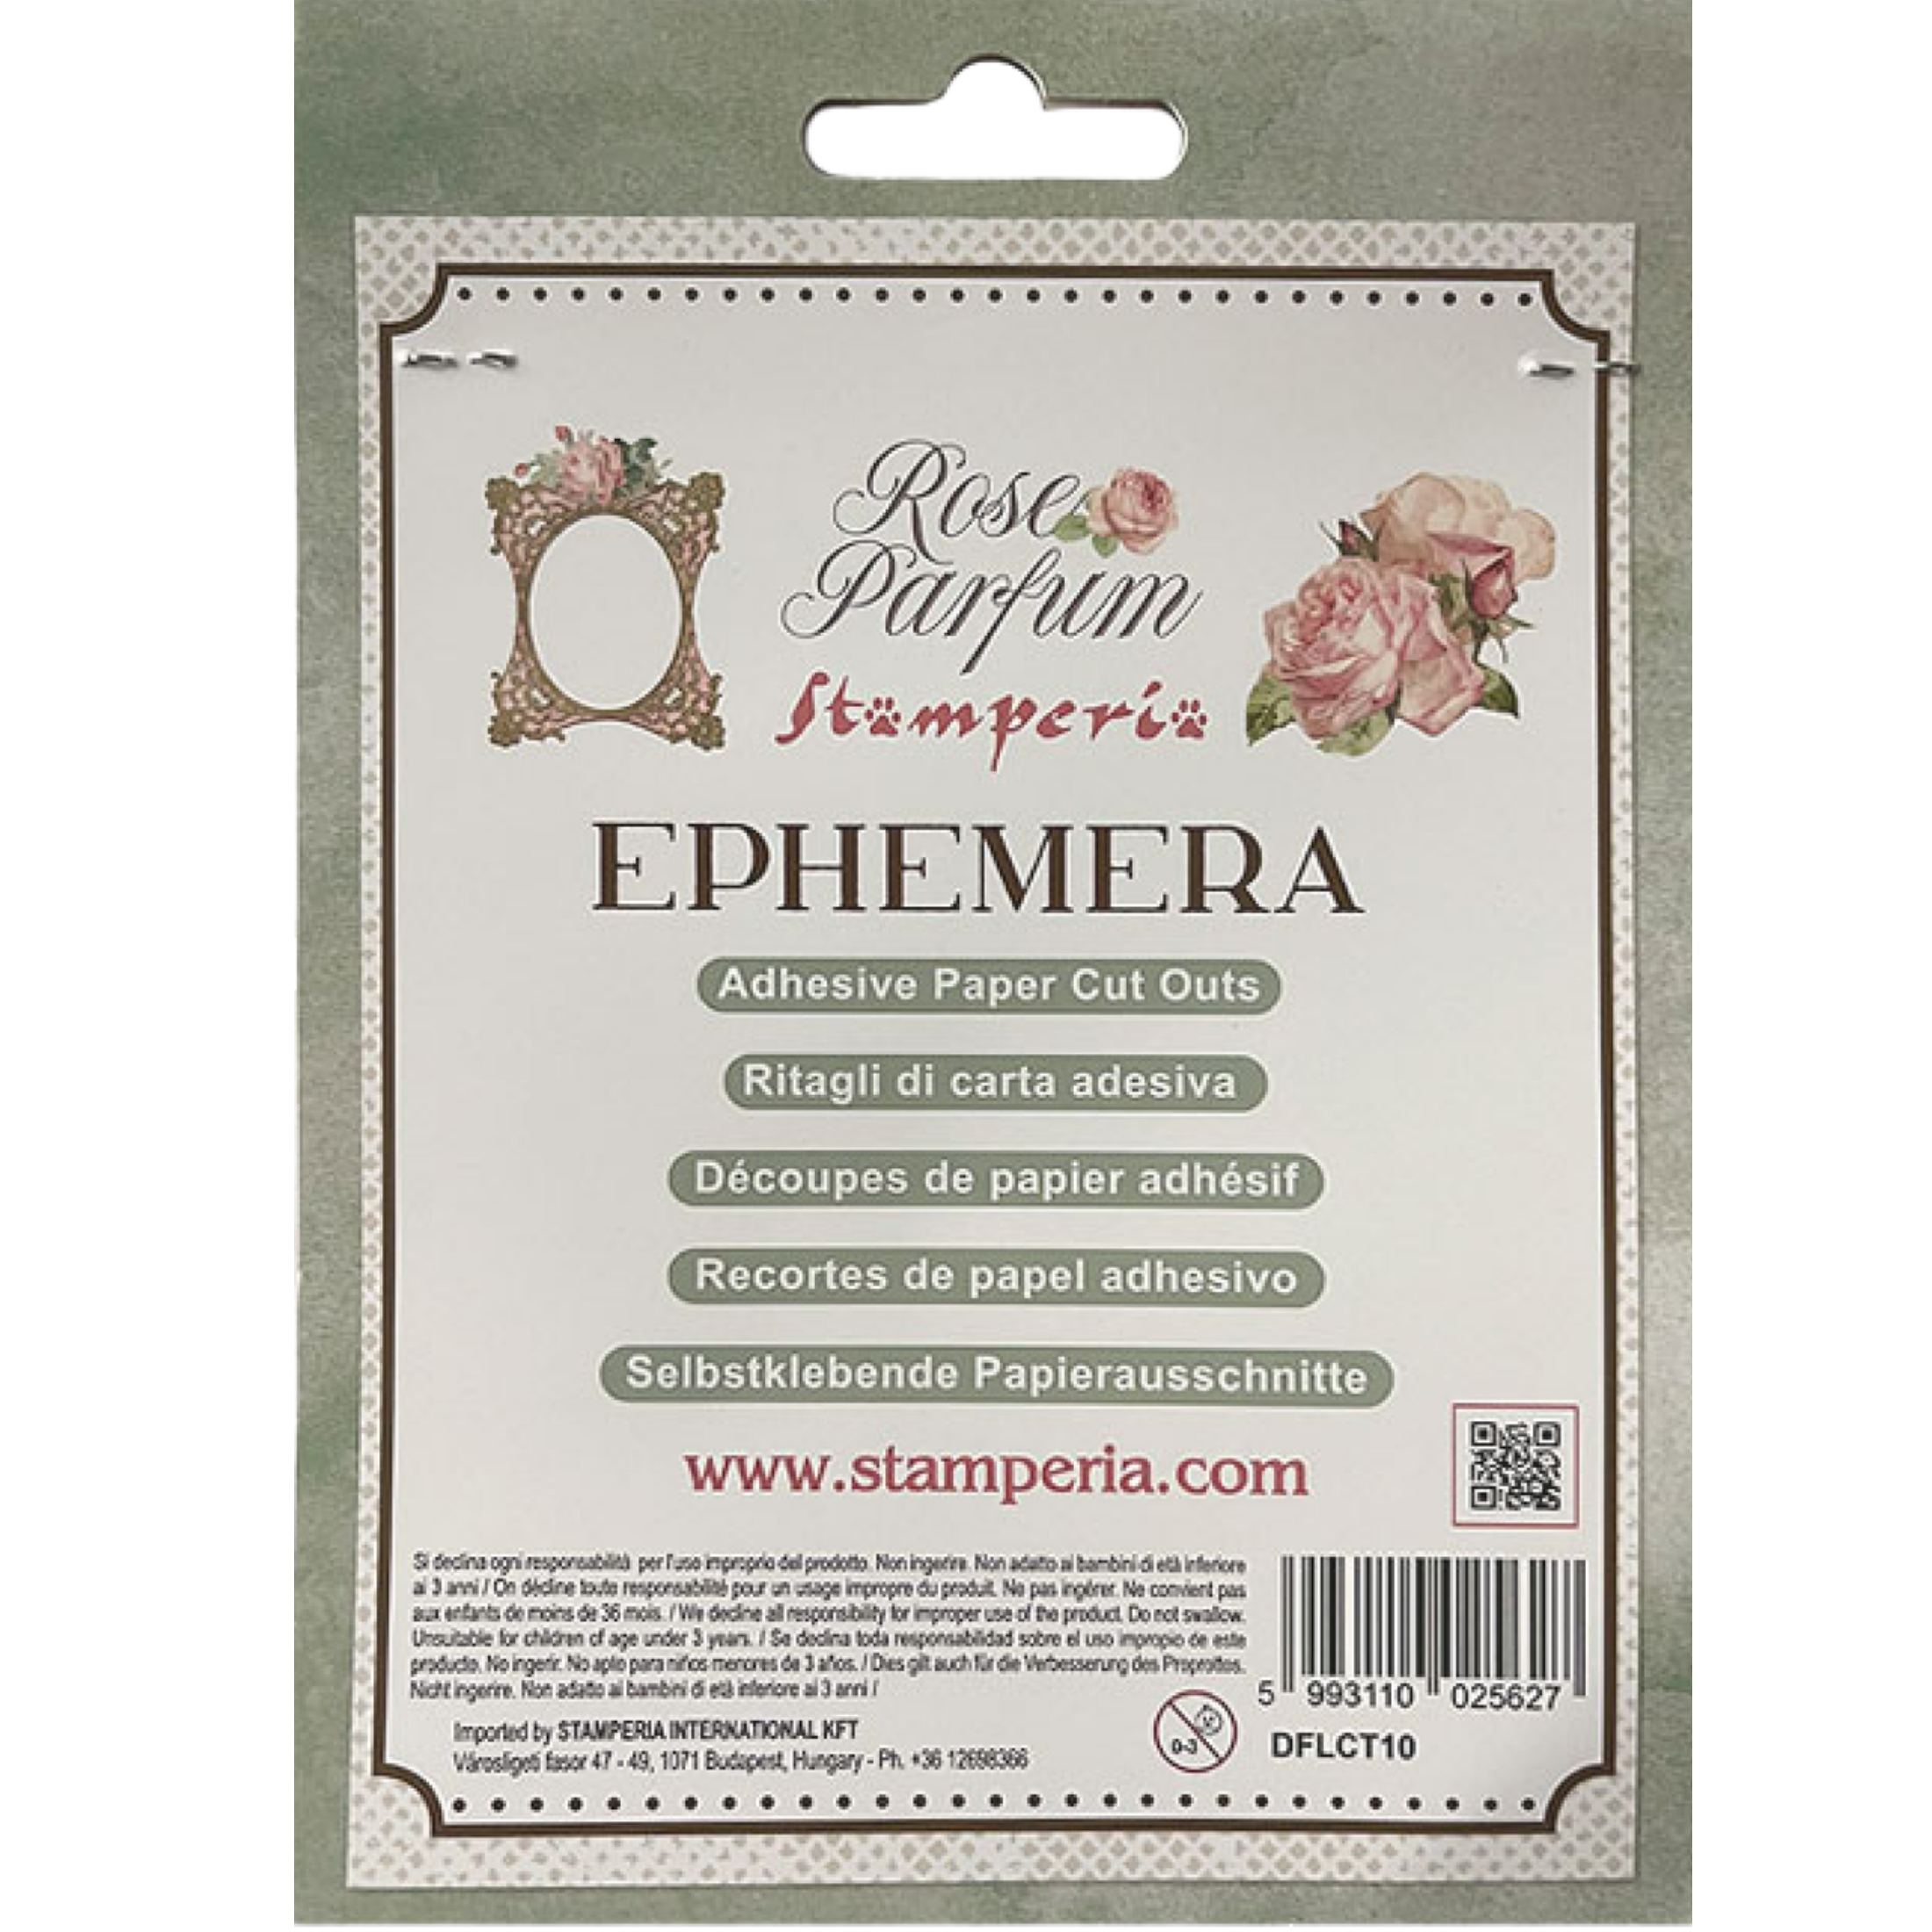 Adesivos Ephemera Rose Parfum 300gr DFLCT10 stamperia